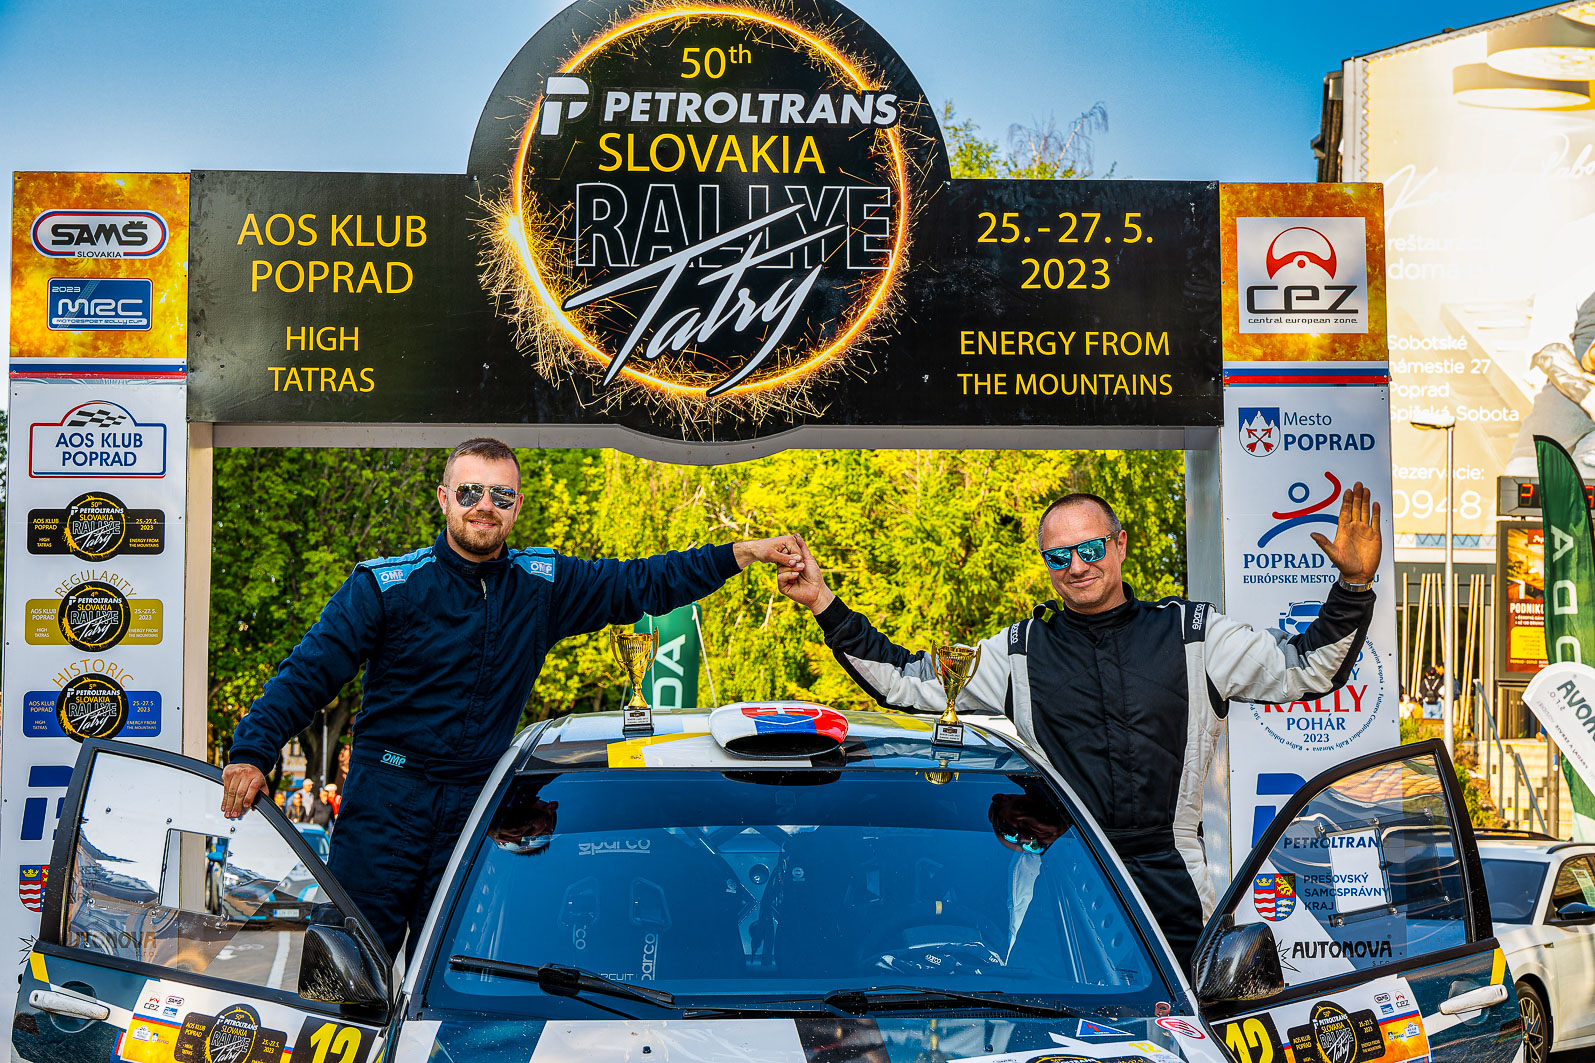 3. Platz bei der Slowakei Rallye Tatra 2023